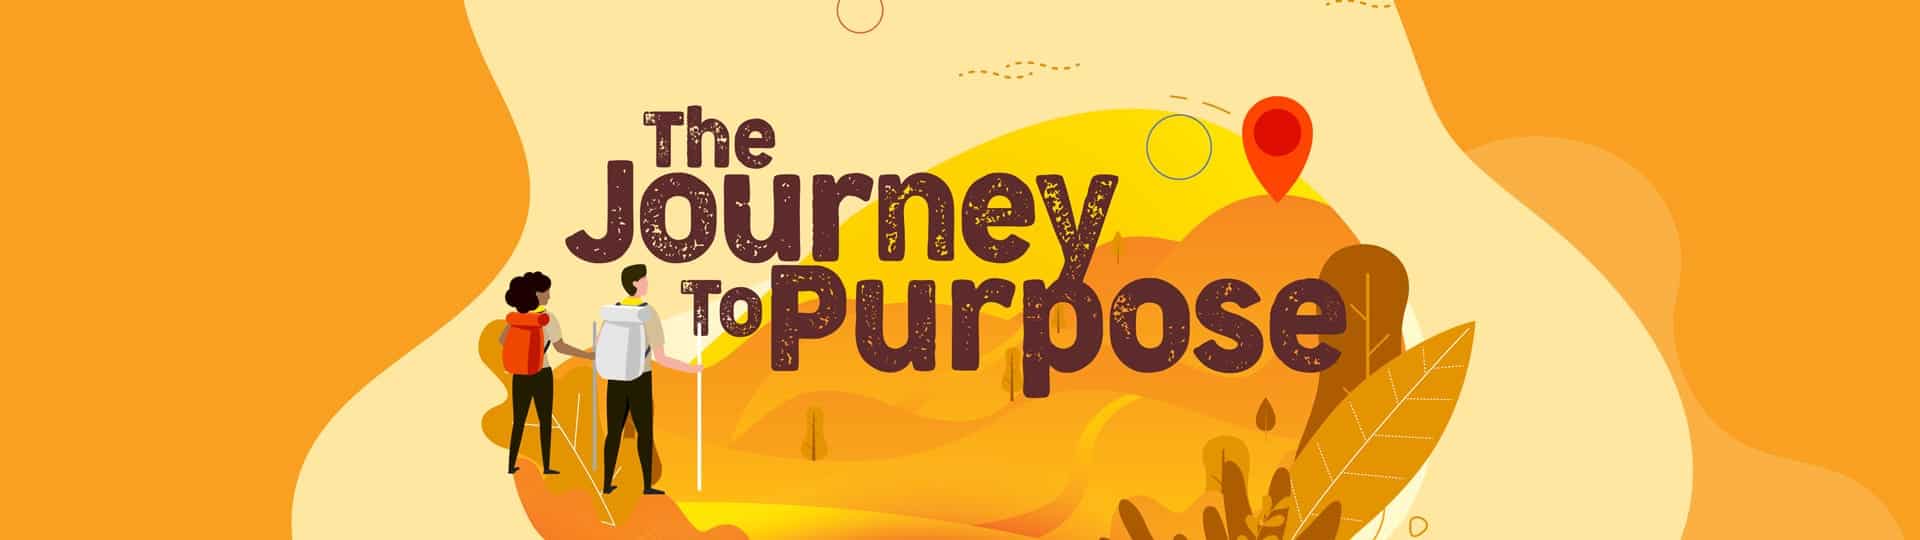 The Journey To Purpose Event Hero Image